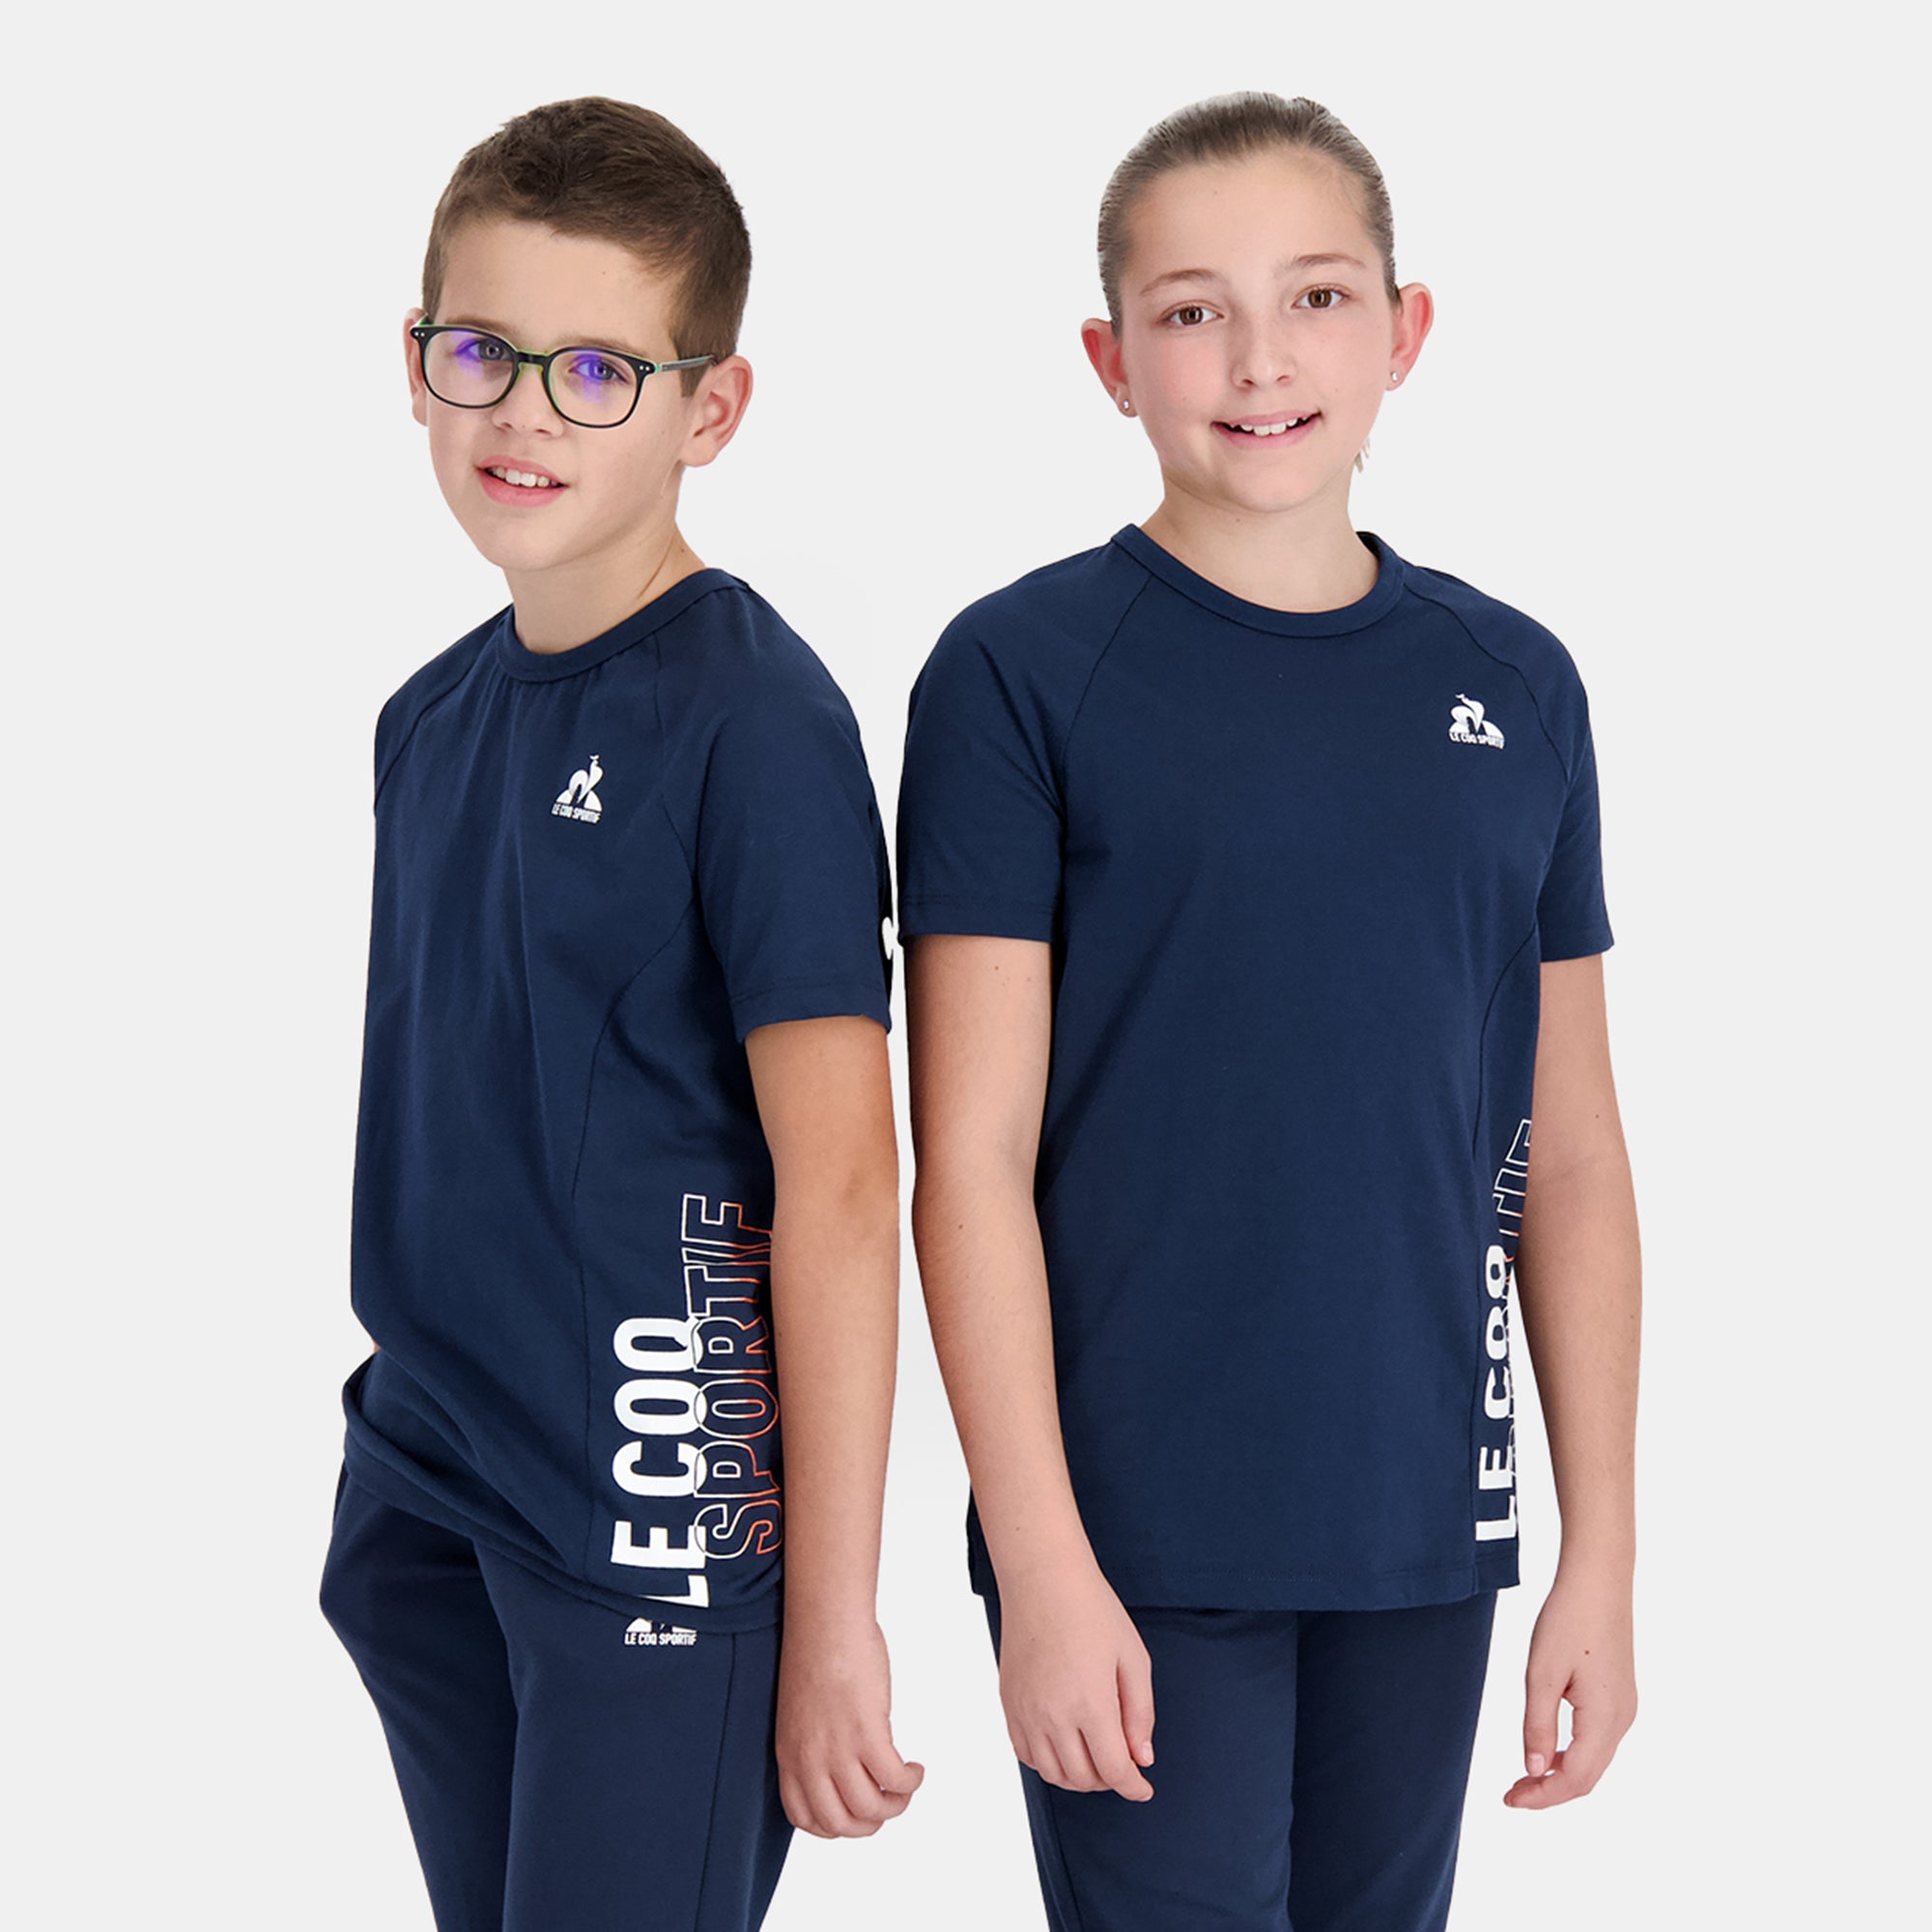 2410125-SAISON 2 Tee SS N°1 Enfant dress blues  | T-Shirt for kids